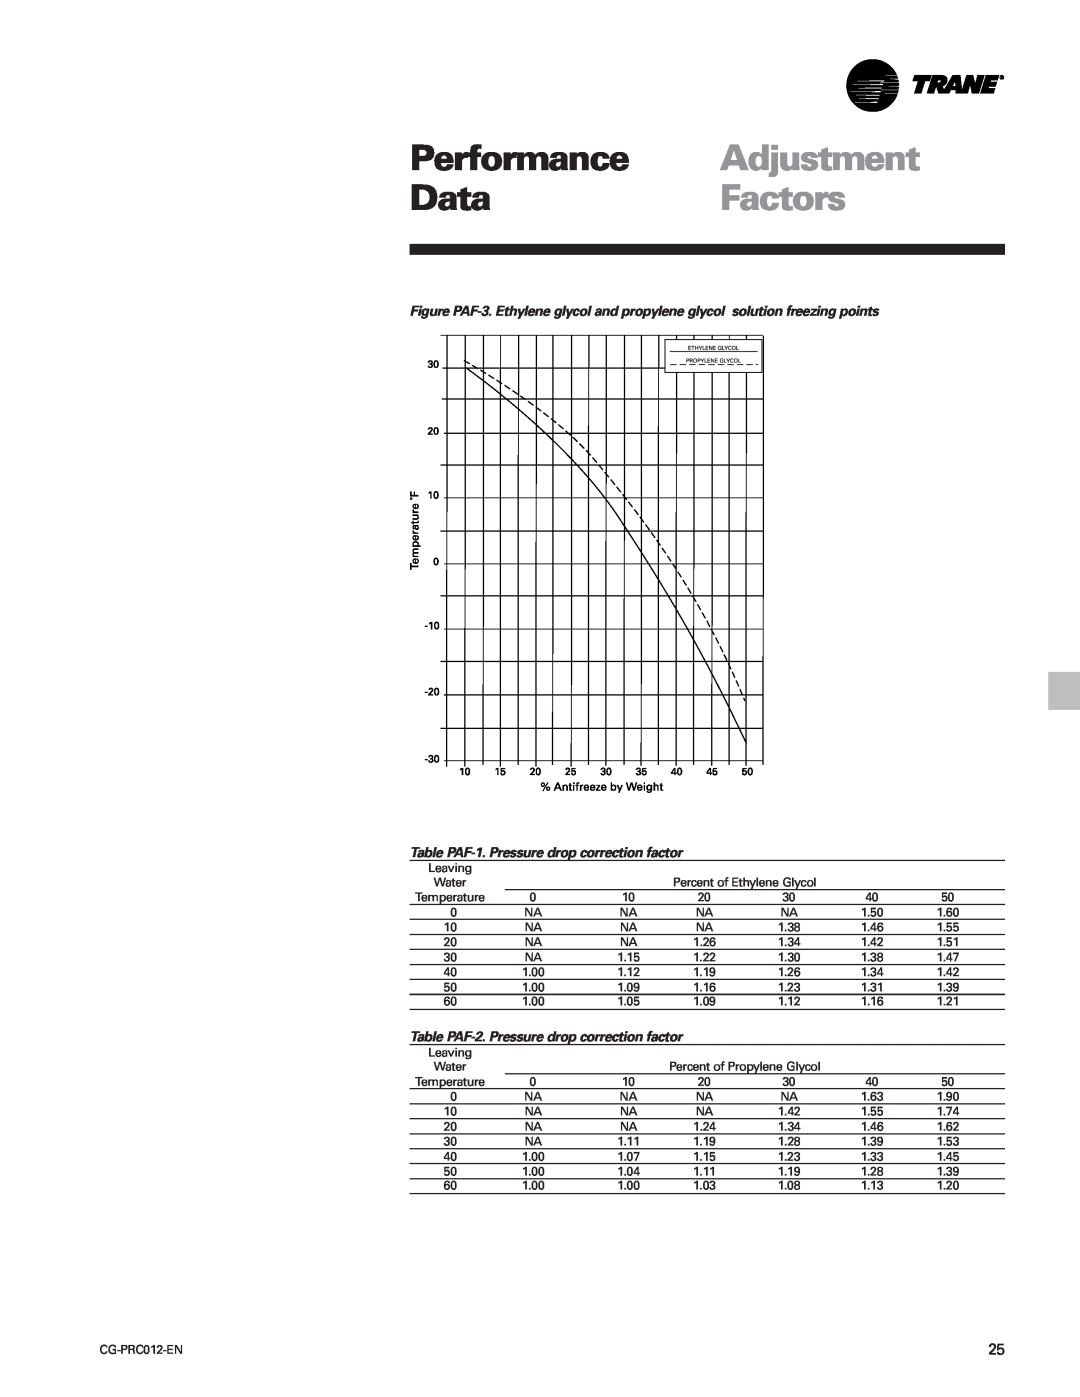 Trane CCAF, CGWF manual Performance Adjustment, Data Factors, Table PAF-1. Pressure drop correction factor 